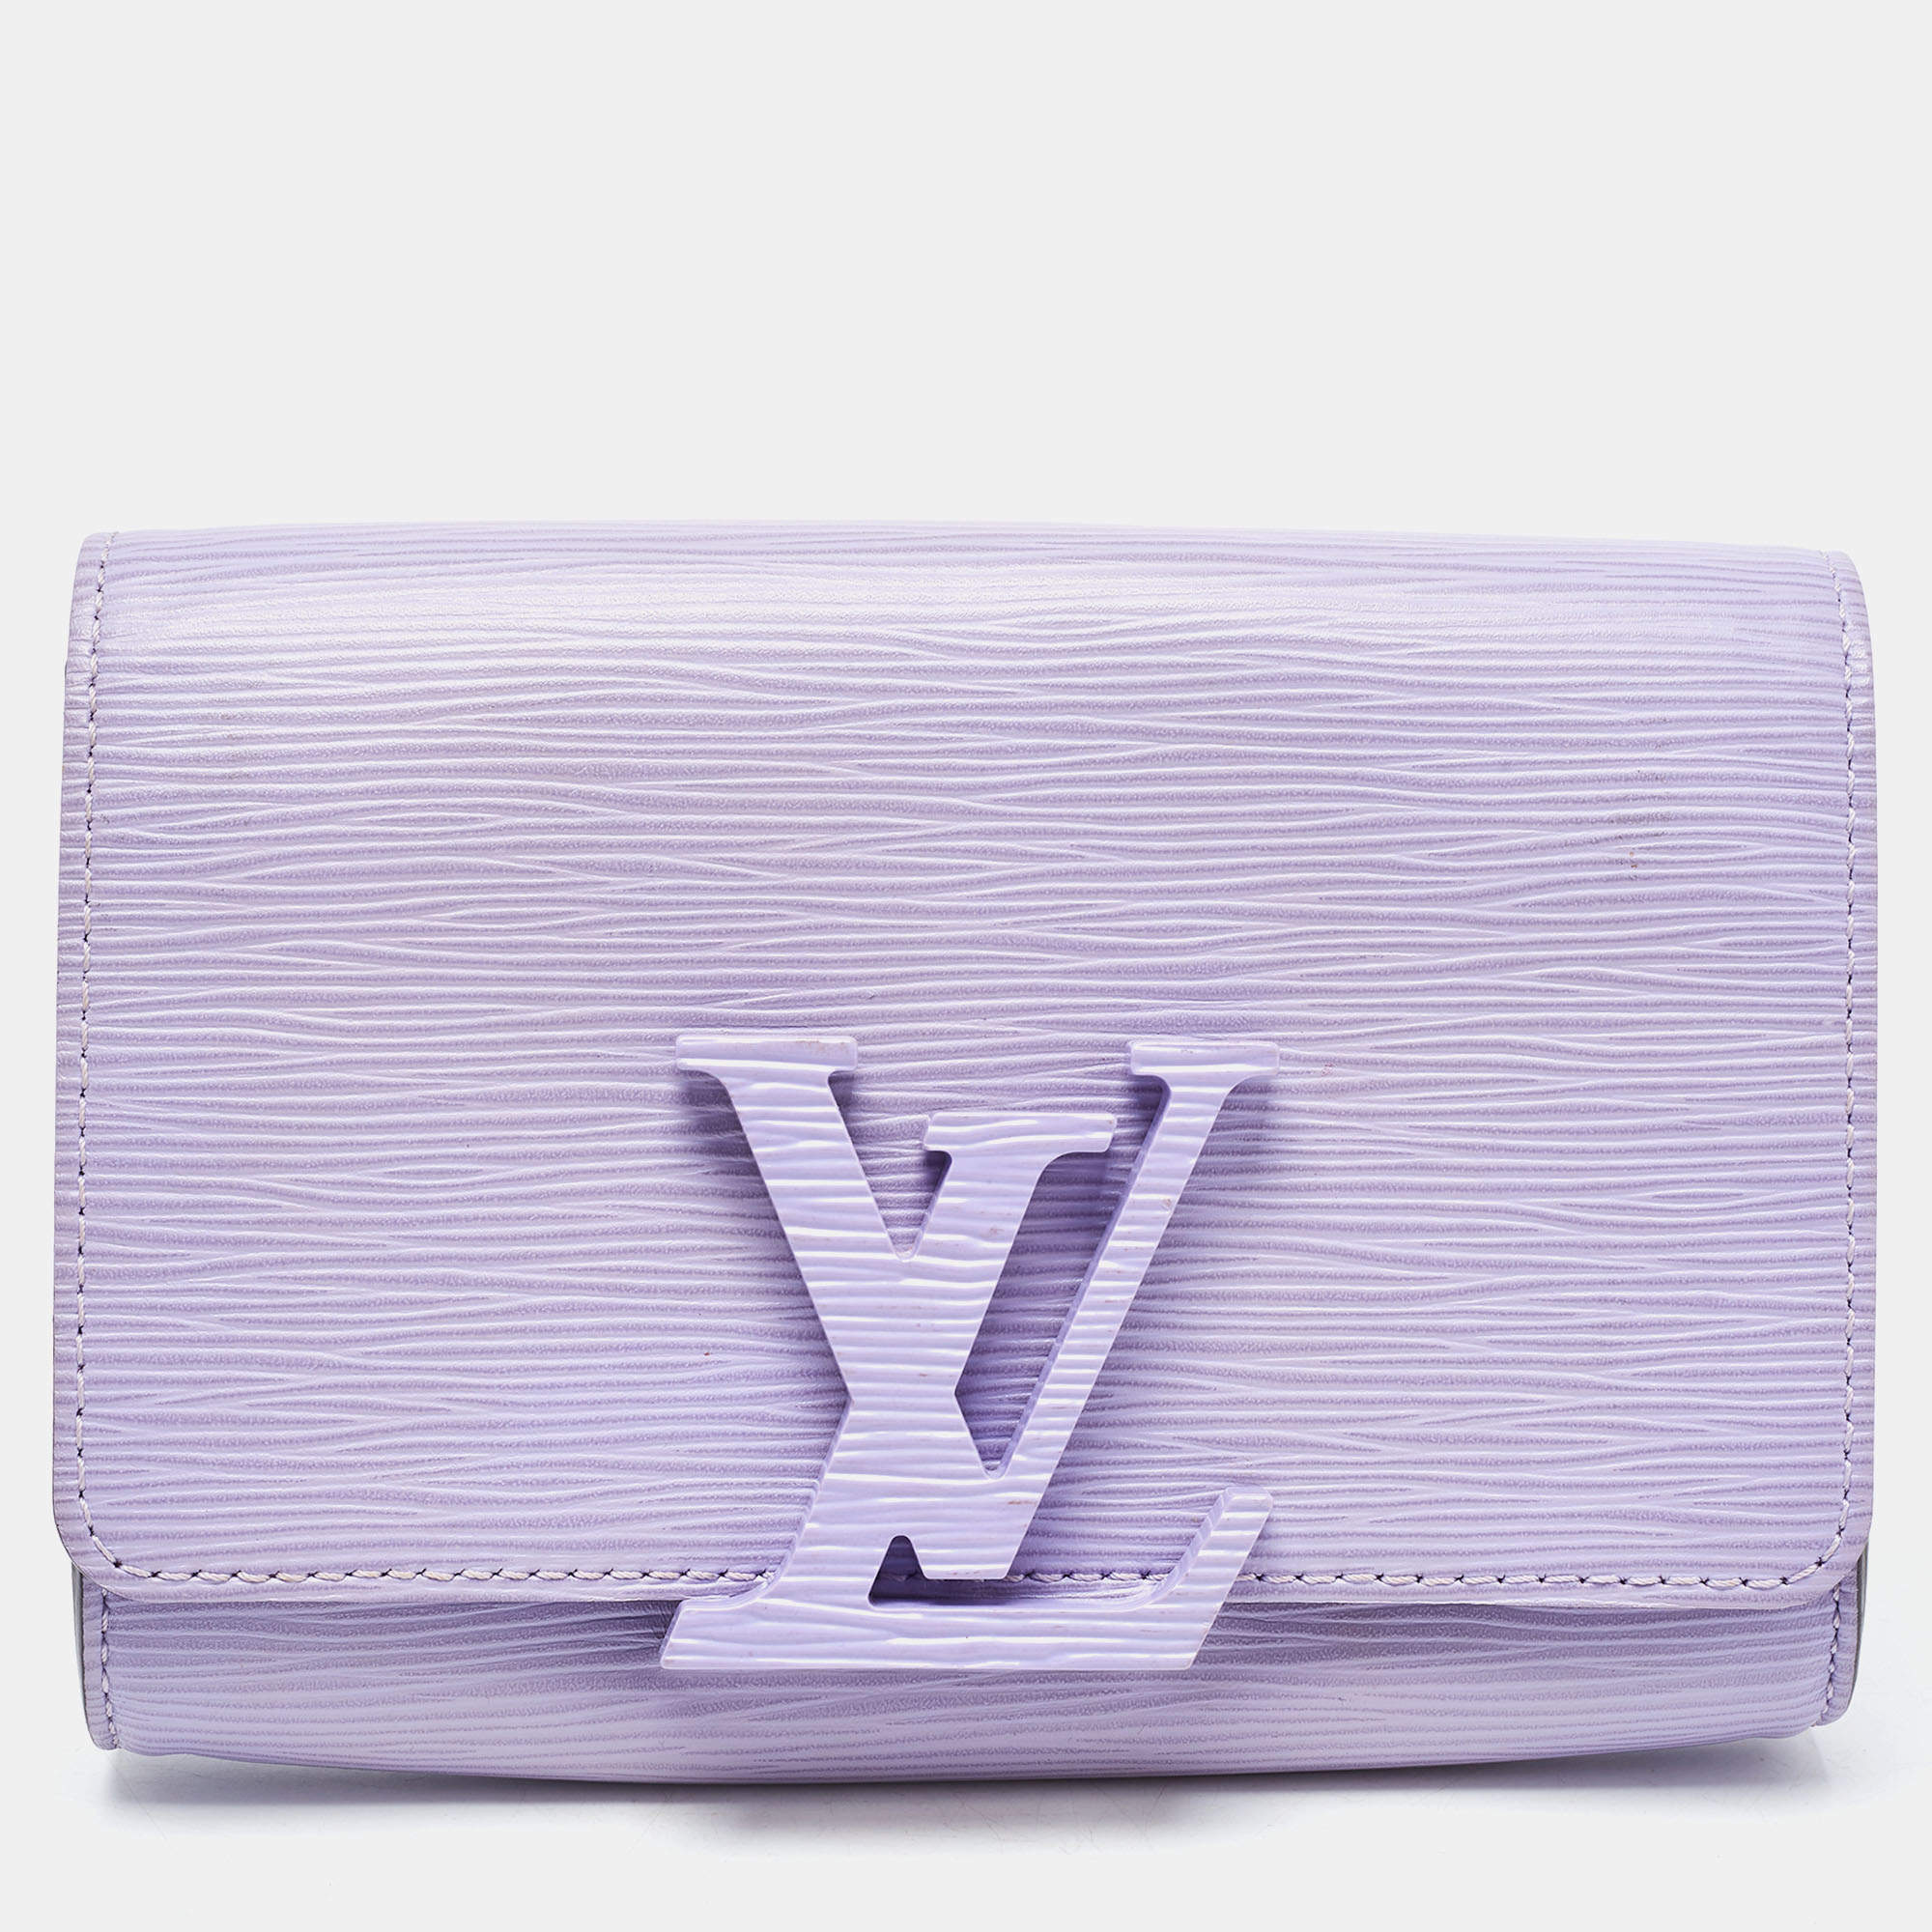 Louis Vuitton's New Pastel Epi Louise Clutches For Summer